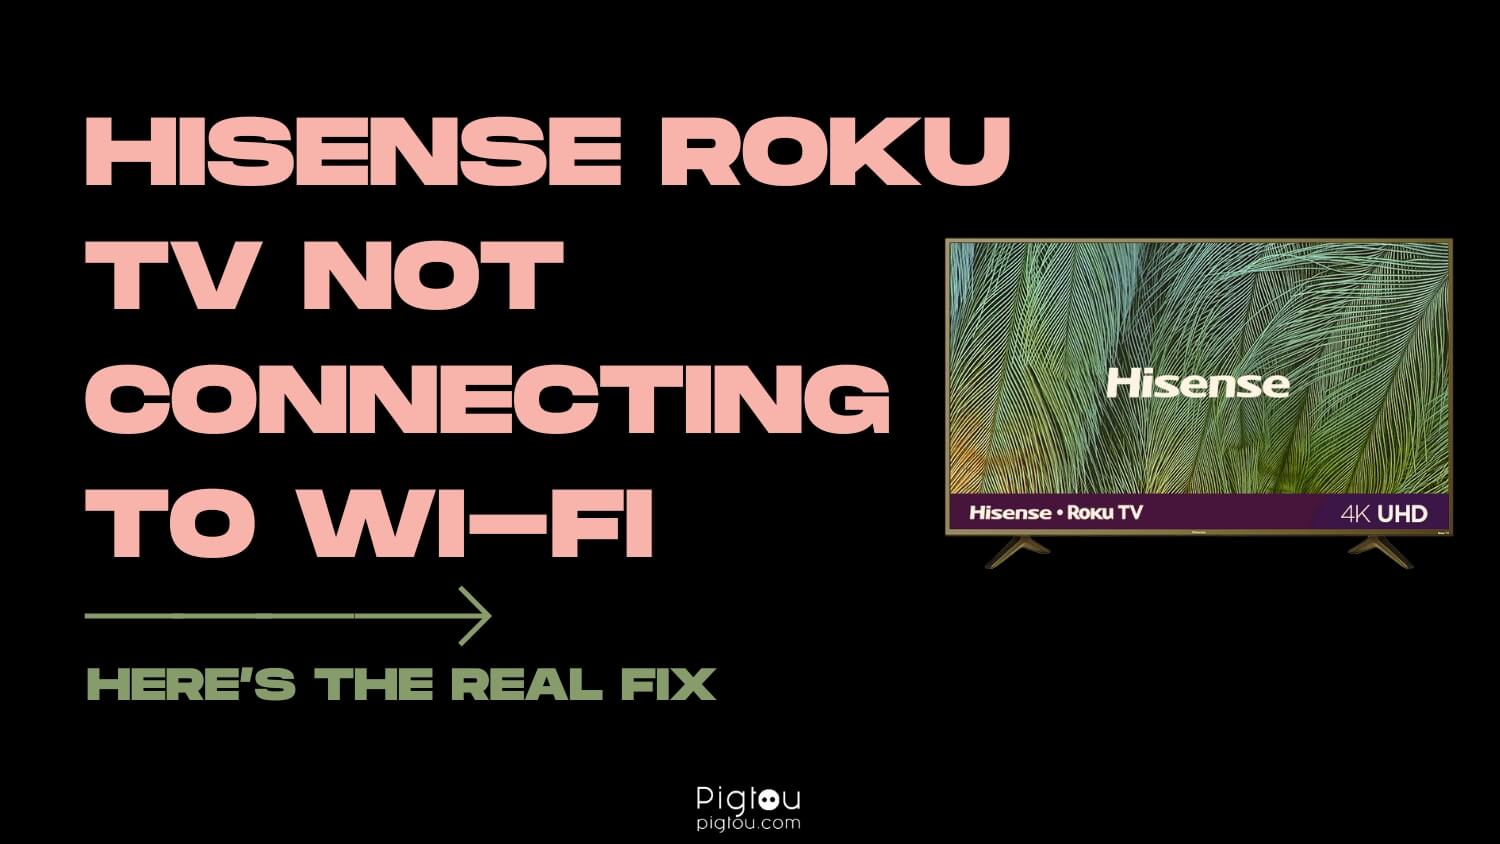 Hisense Roku TV Not Connecting to Wi-Fi